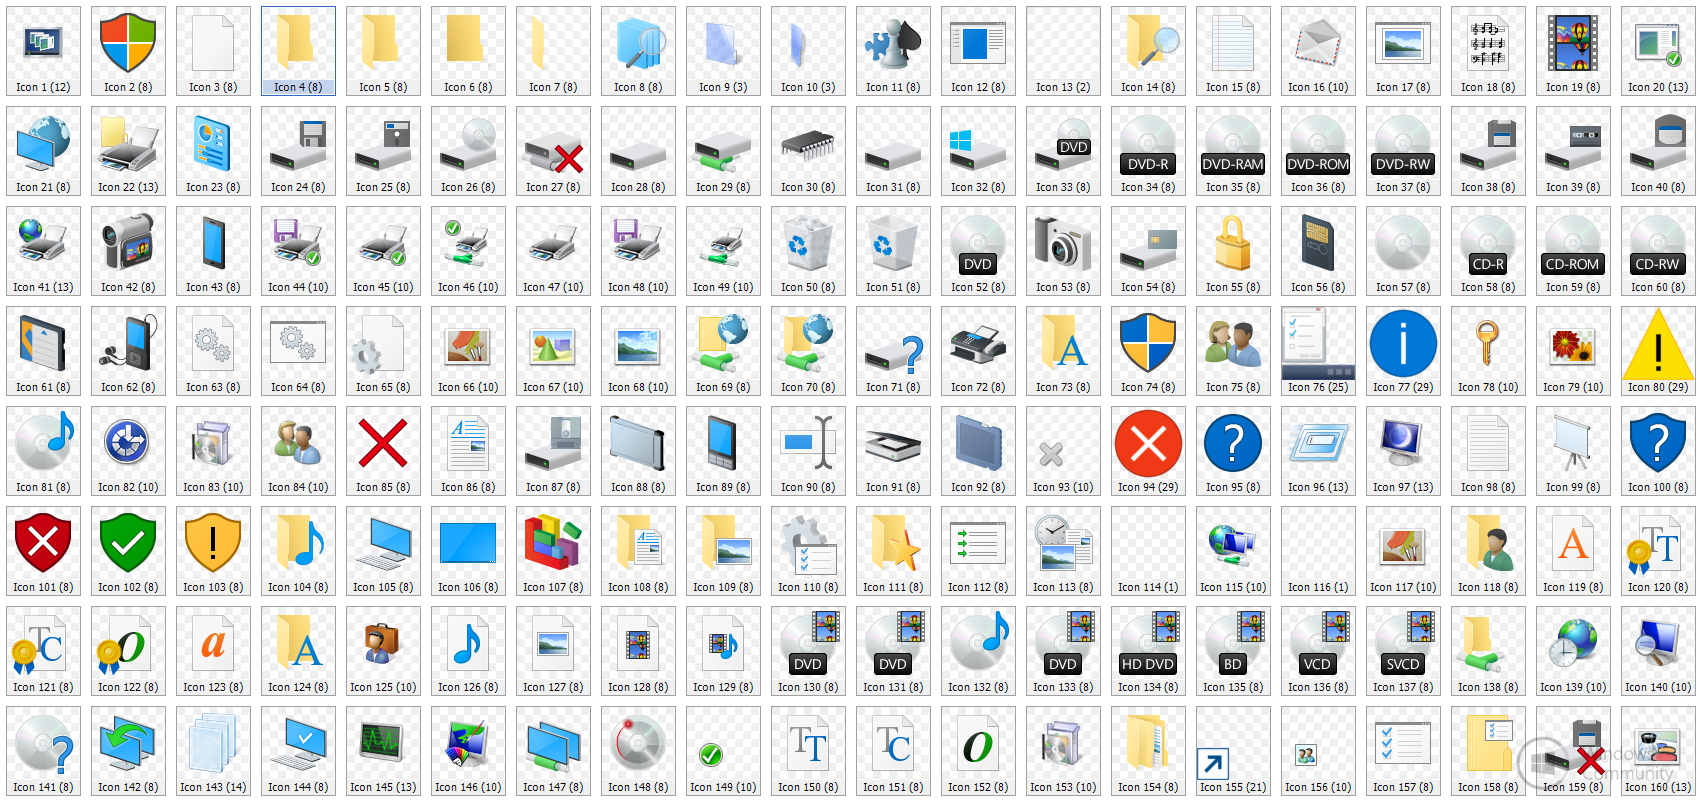 Файл значков windows. Иконки для приложений виндовс 10. Значок виндовс. Значок программы. Значок приложения Windows.